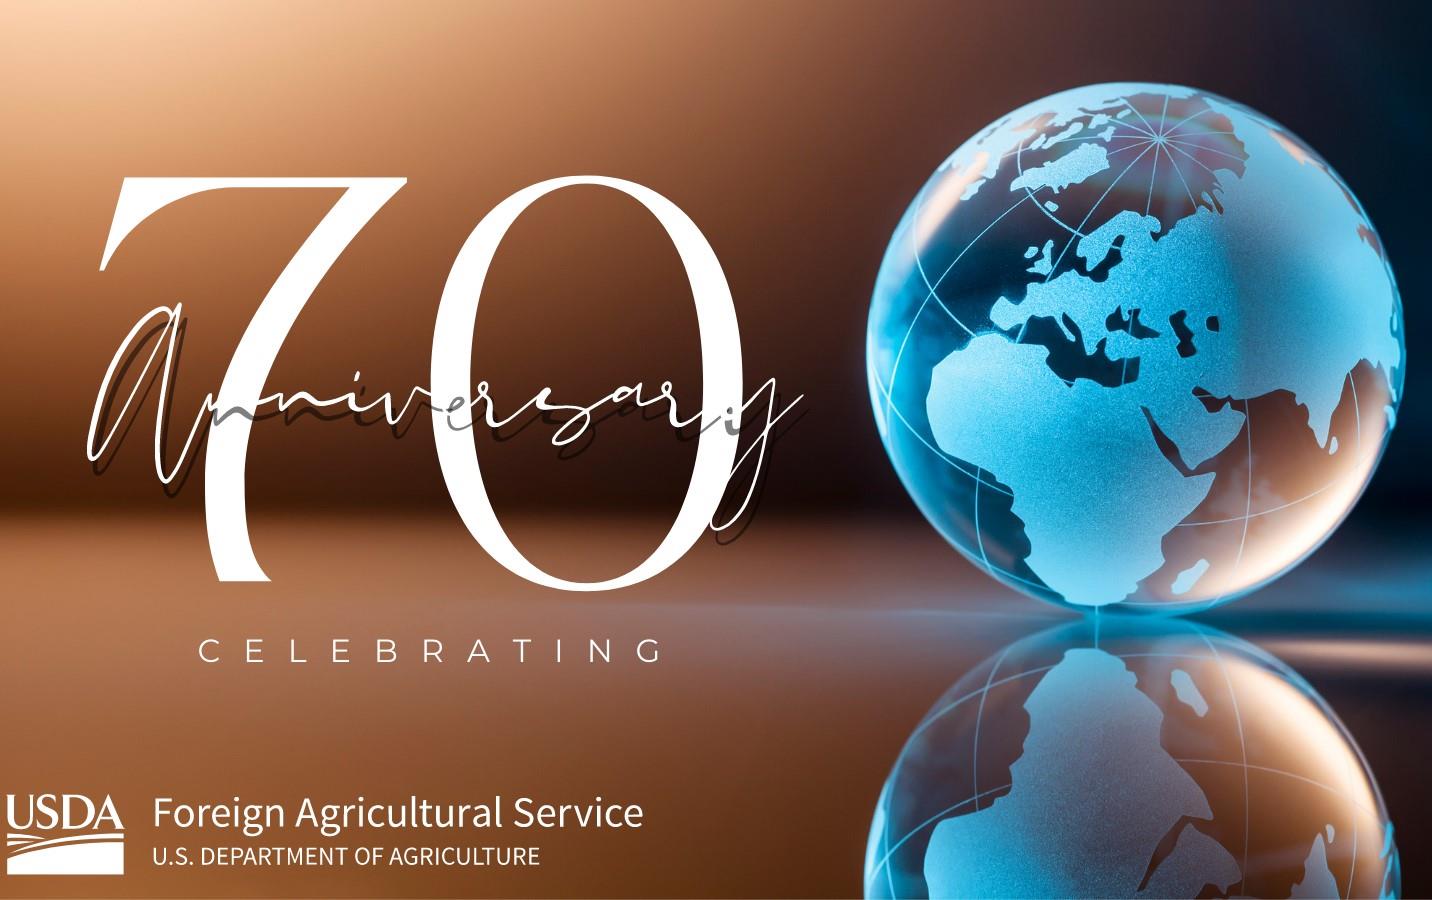 USDA FAS 70 Anniversary Graphic, with mirrored image of globe